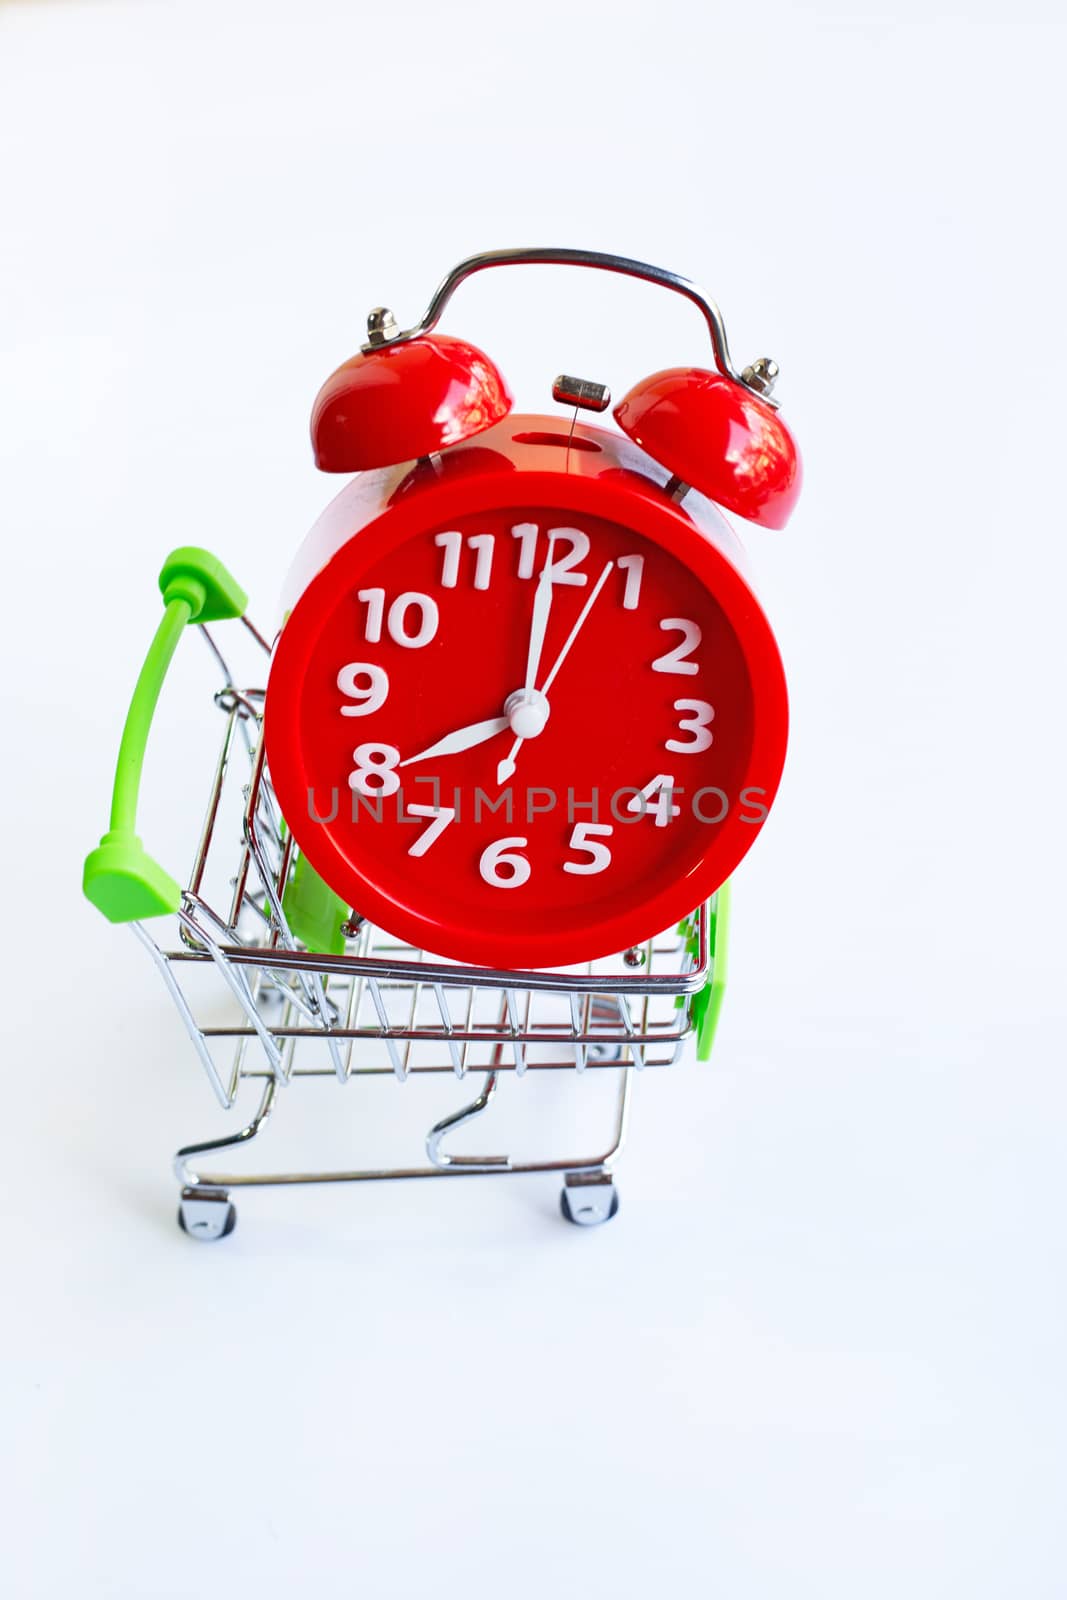 Alarm clock on shopping cart on white